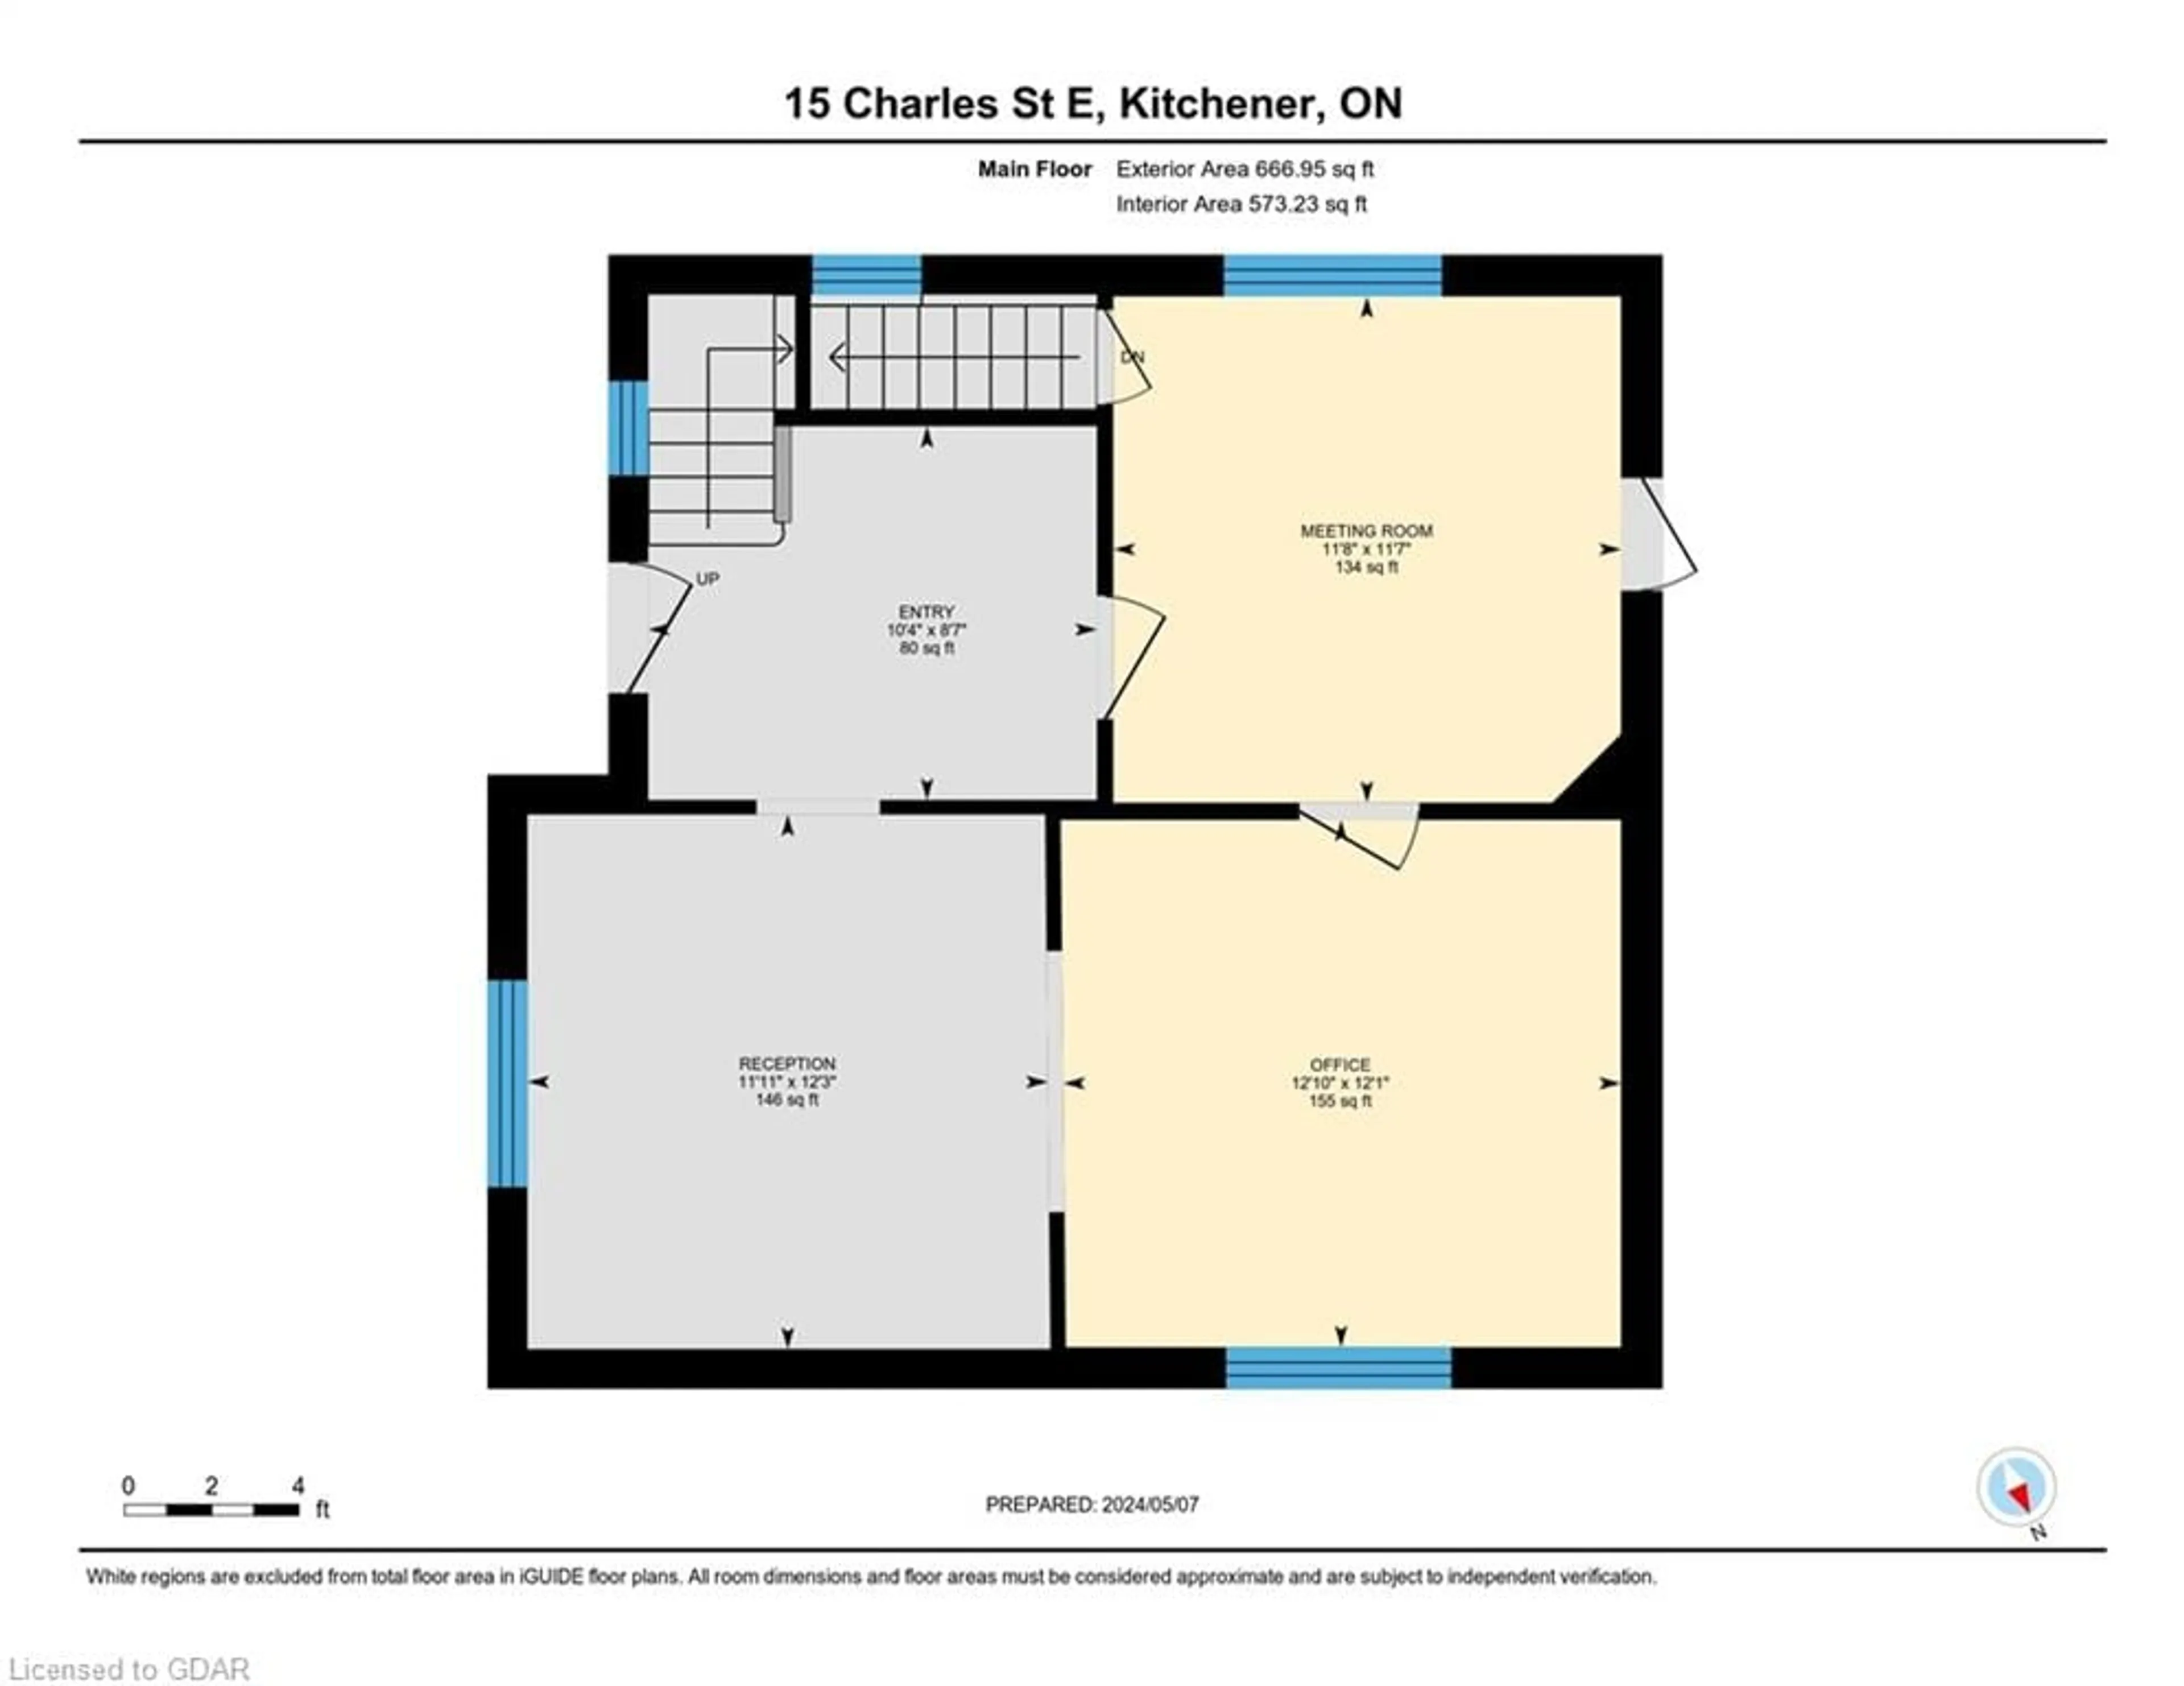 Floor plan for 15 Charles St, Kitchener Ontario N2G 2P3